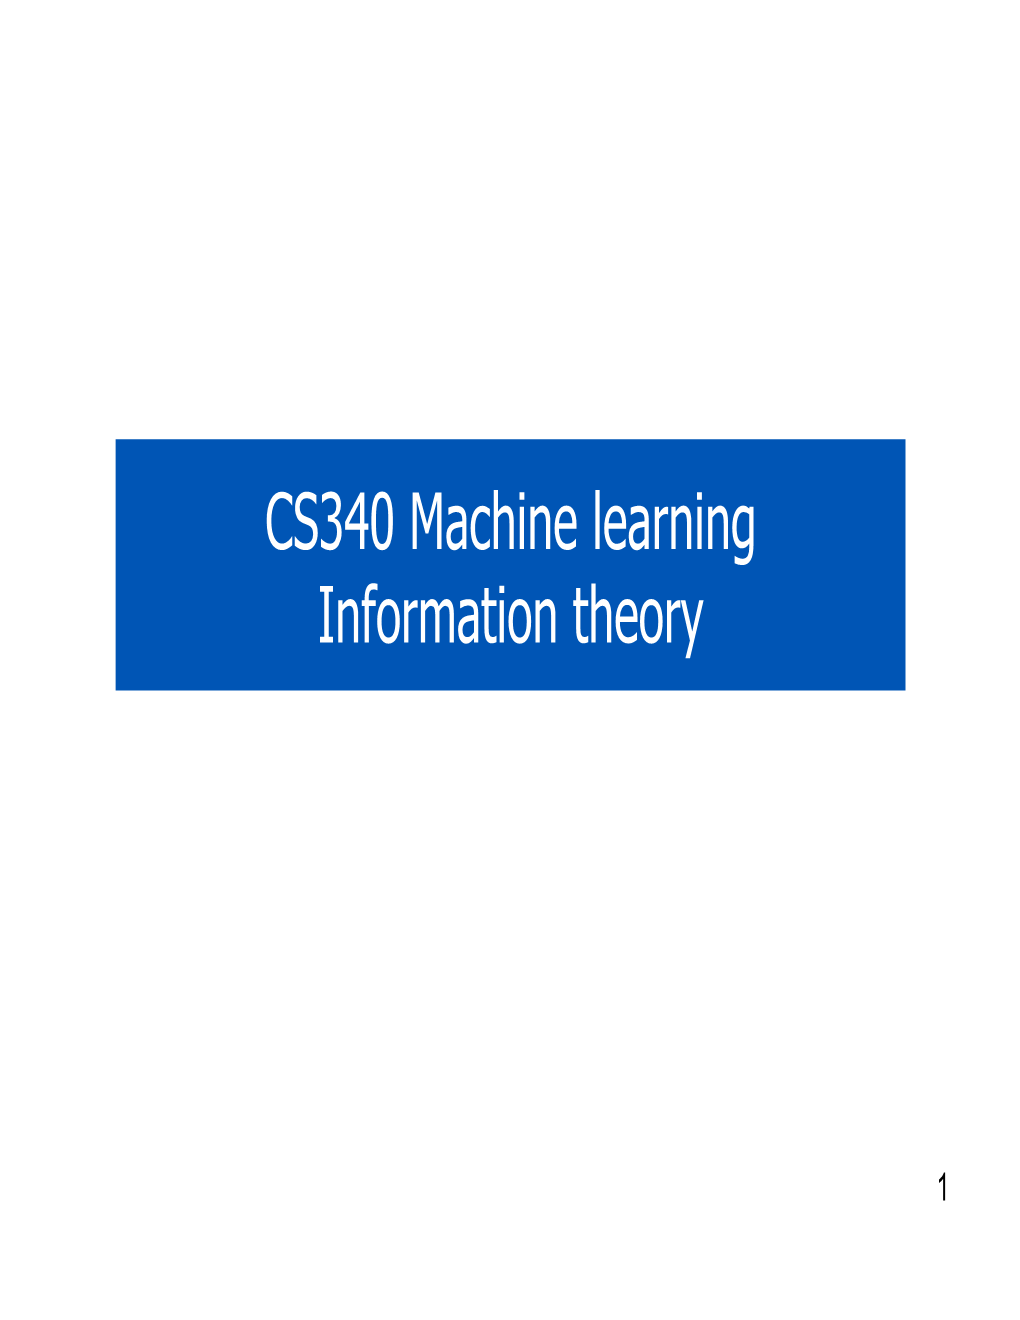 CS340 Machine Learning Information Theory